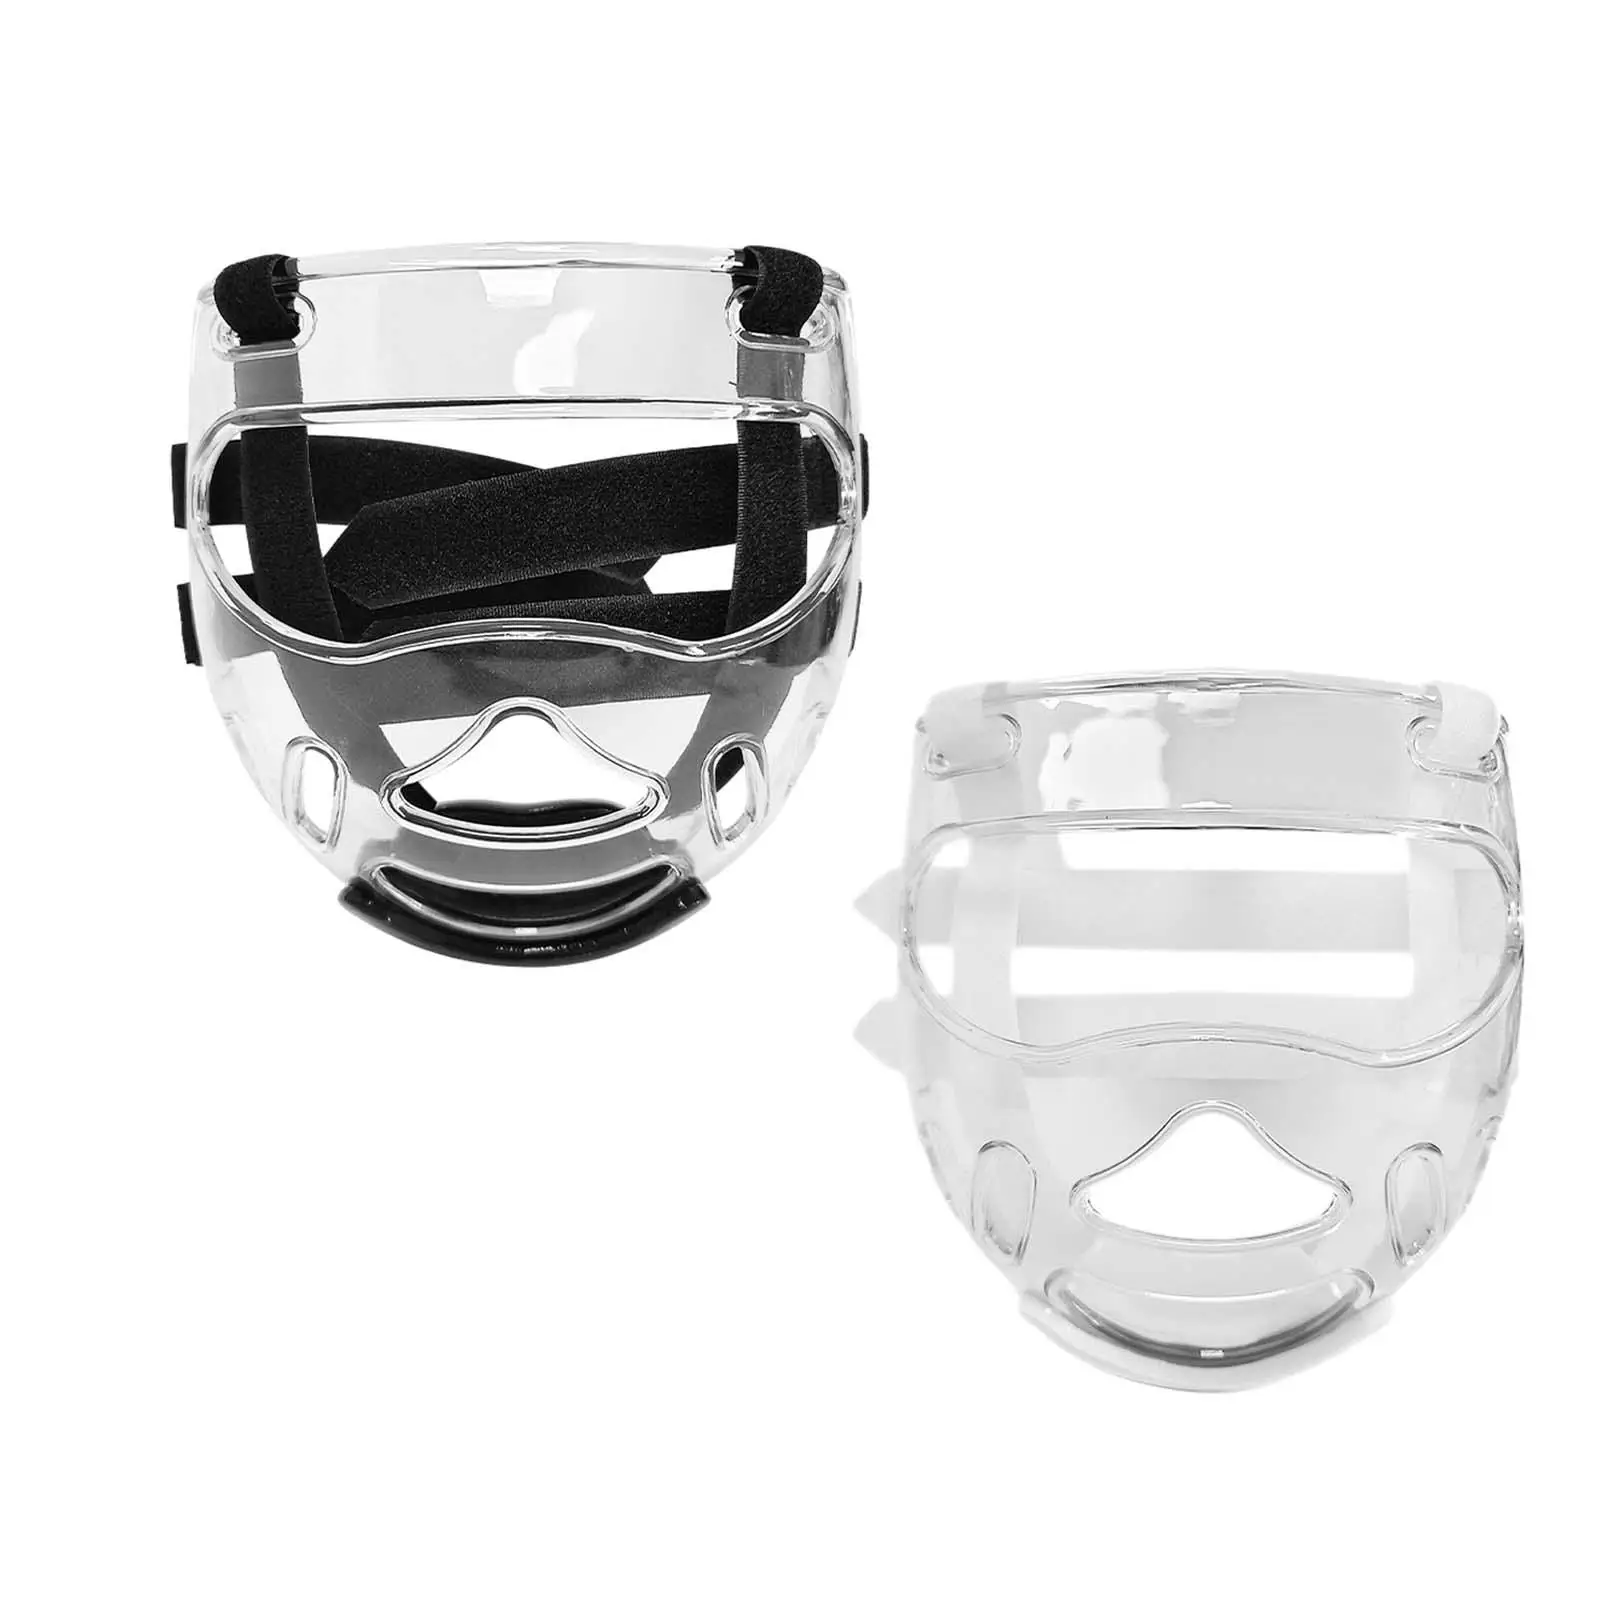 Taekwondo Face Mask Taekwondo Face Shield Protector Face Protection Cover for Muay Thai Fighting Wrestling Karate Kickboxing